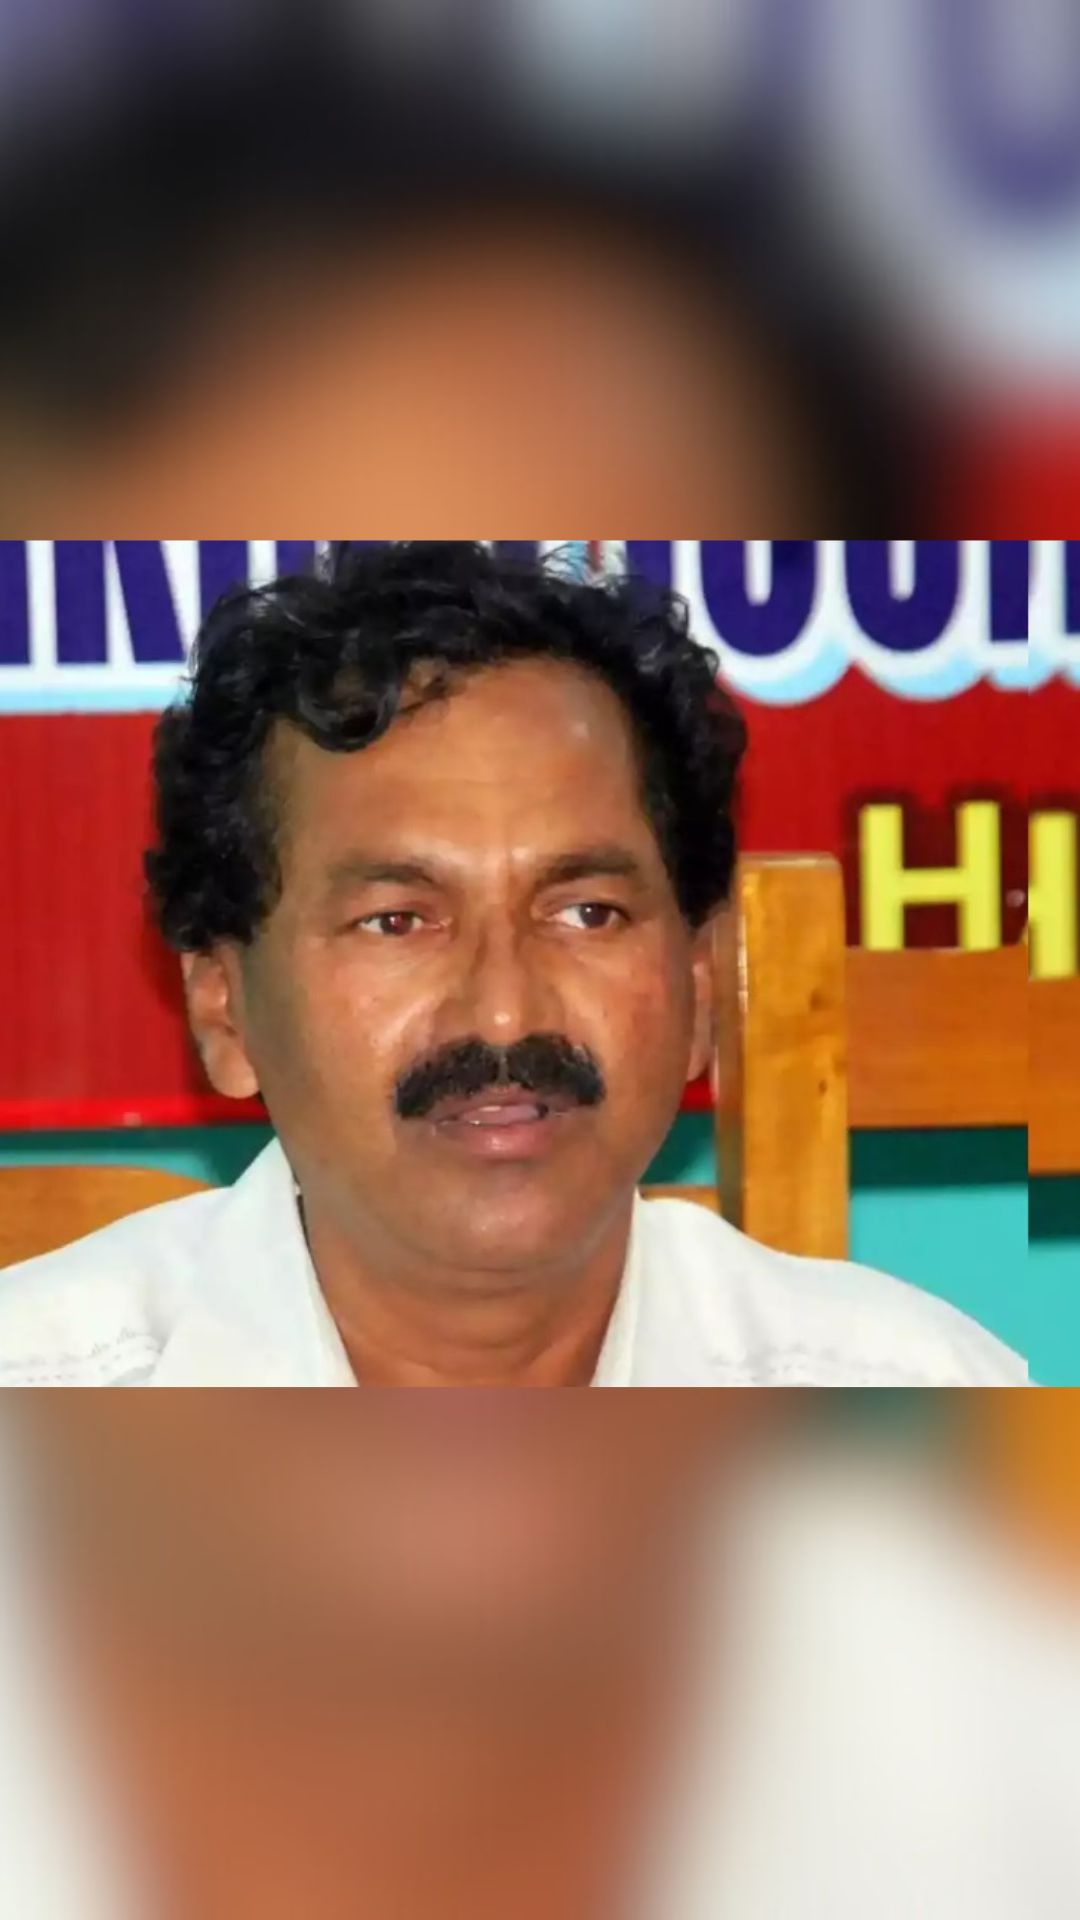 M Lakshman is Congress' candidate from Karnataka's Mysore